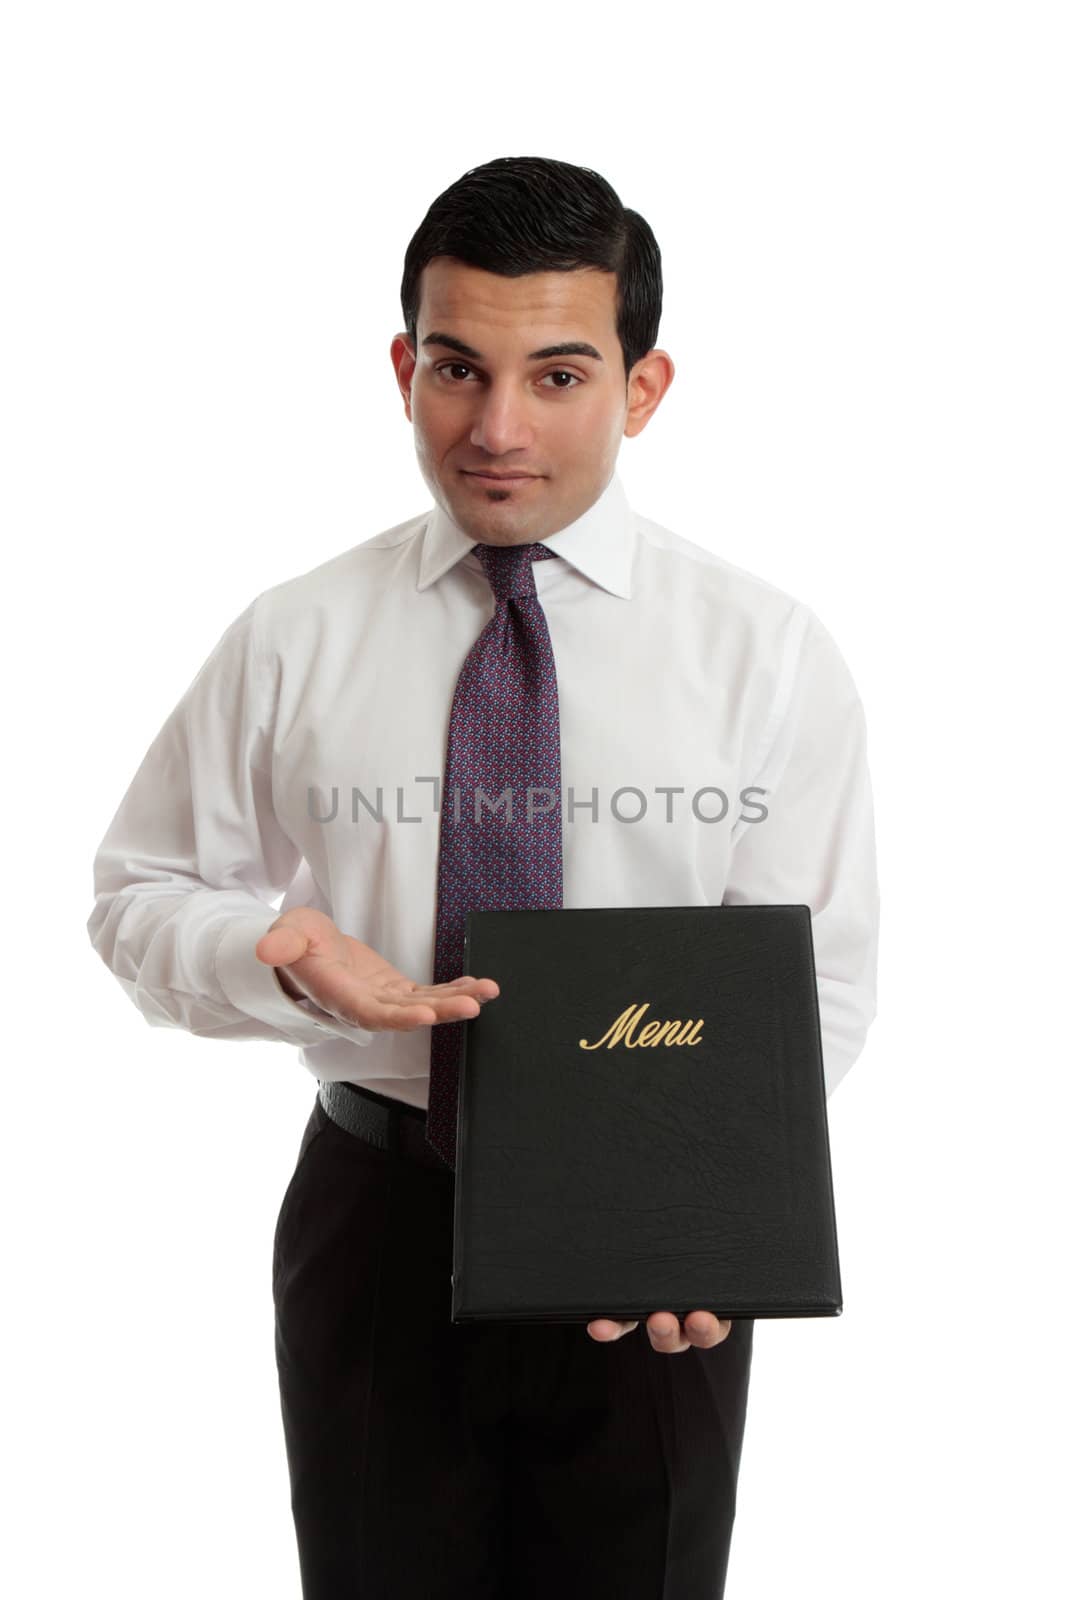 A businessman restauranteur presenting, showing a leatherbound menu.